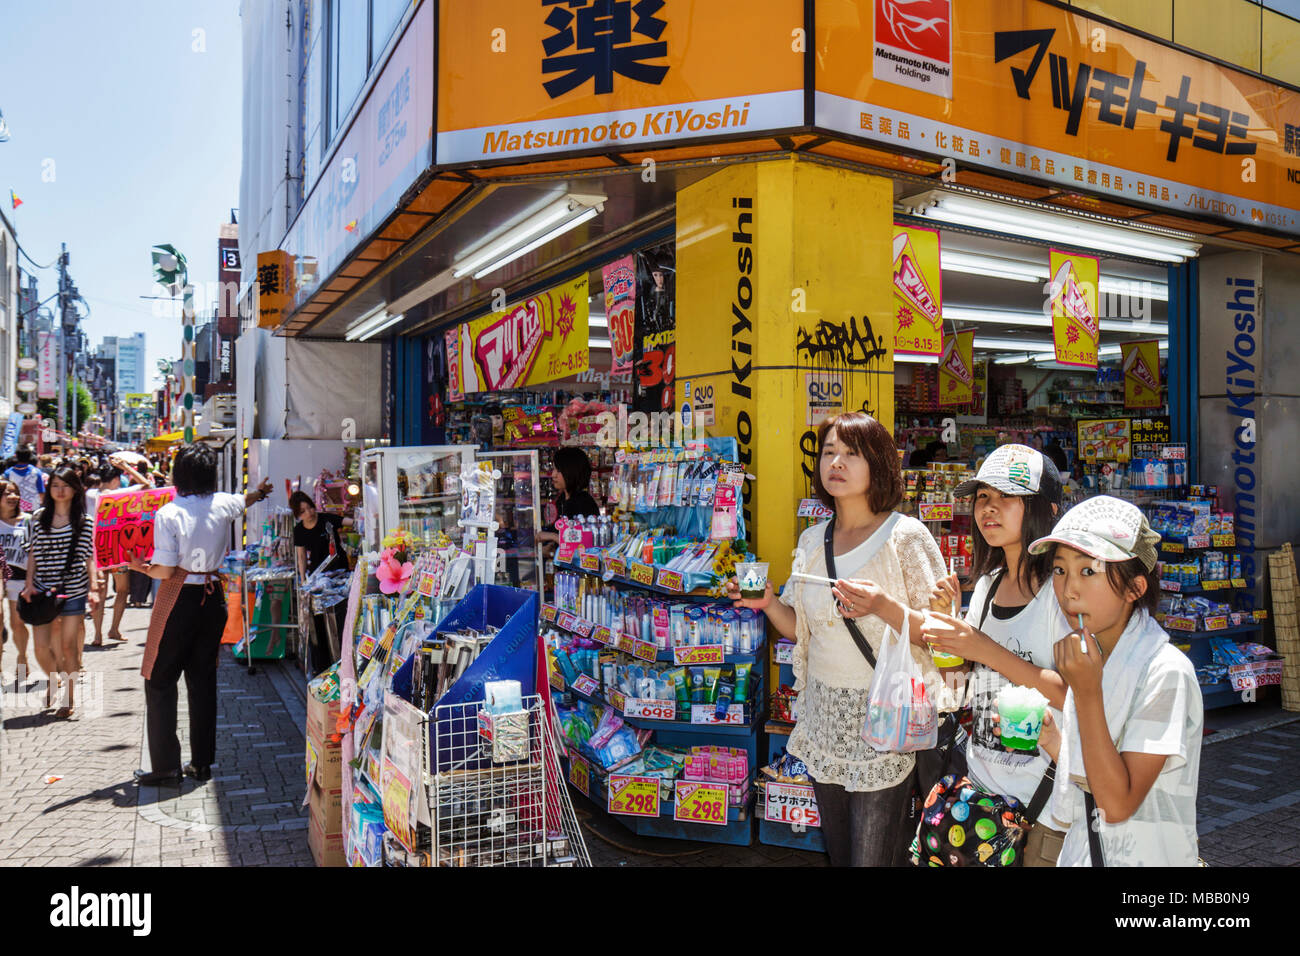 Tokyo Japan,Orient,Harajuku,Takeshita Dori,Street,shopping shoppers shop shops market buying selling,store stores business businesses,kanji,hiragana,c Stock Photo